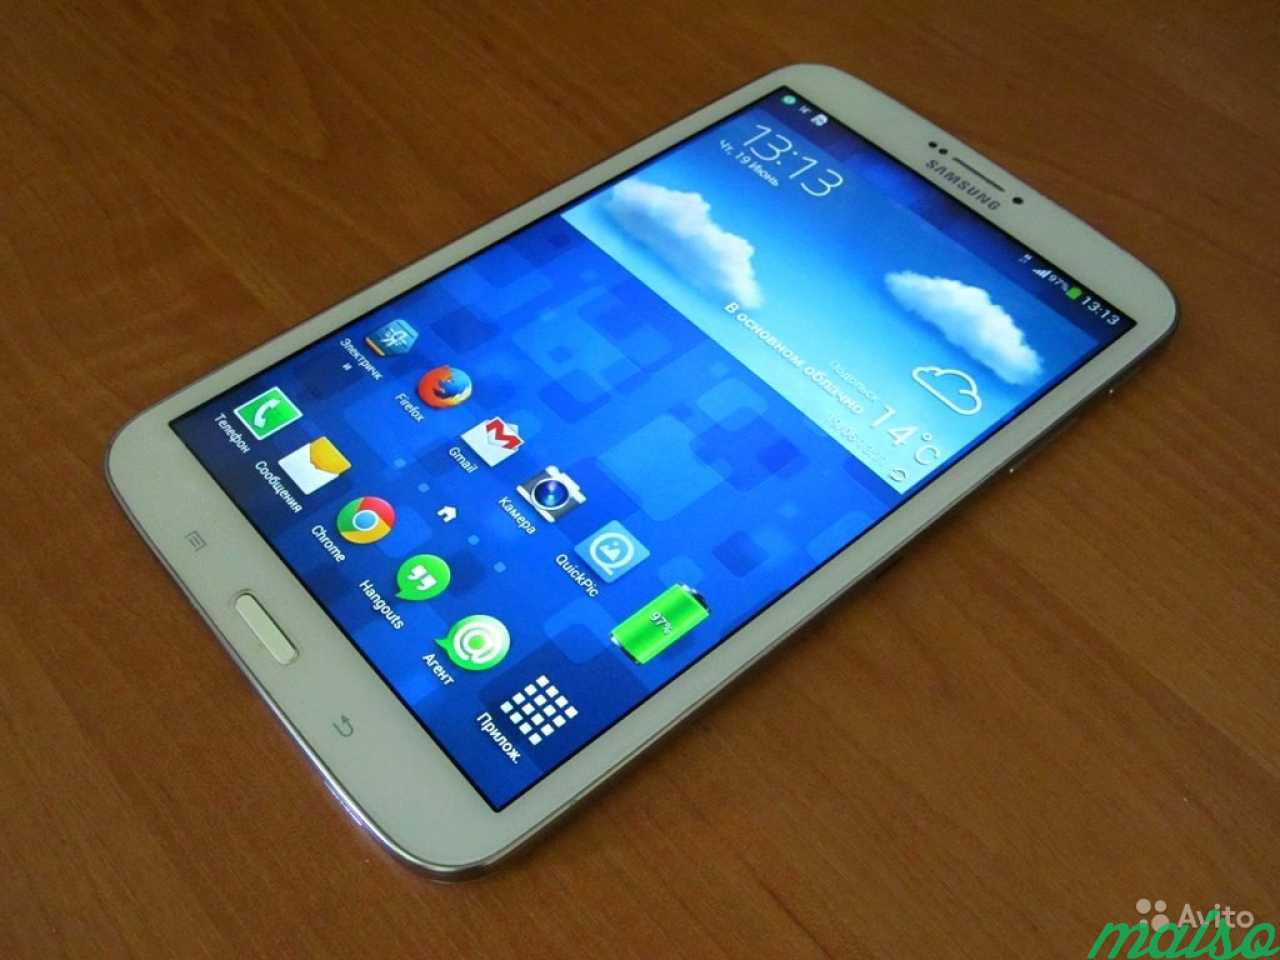 Samsung Galaxy Tab 3 8.0 16gb